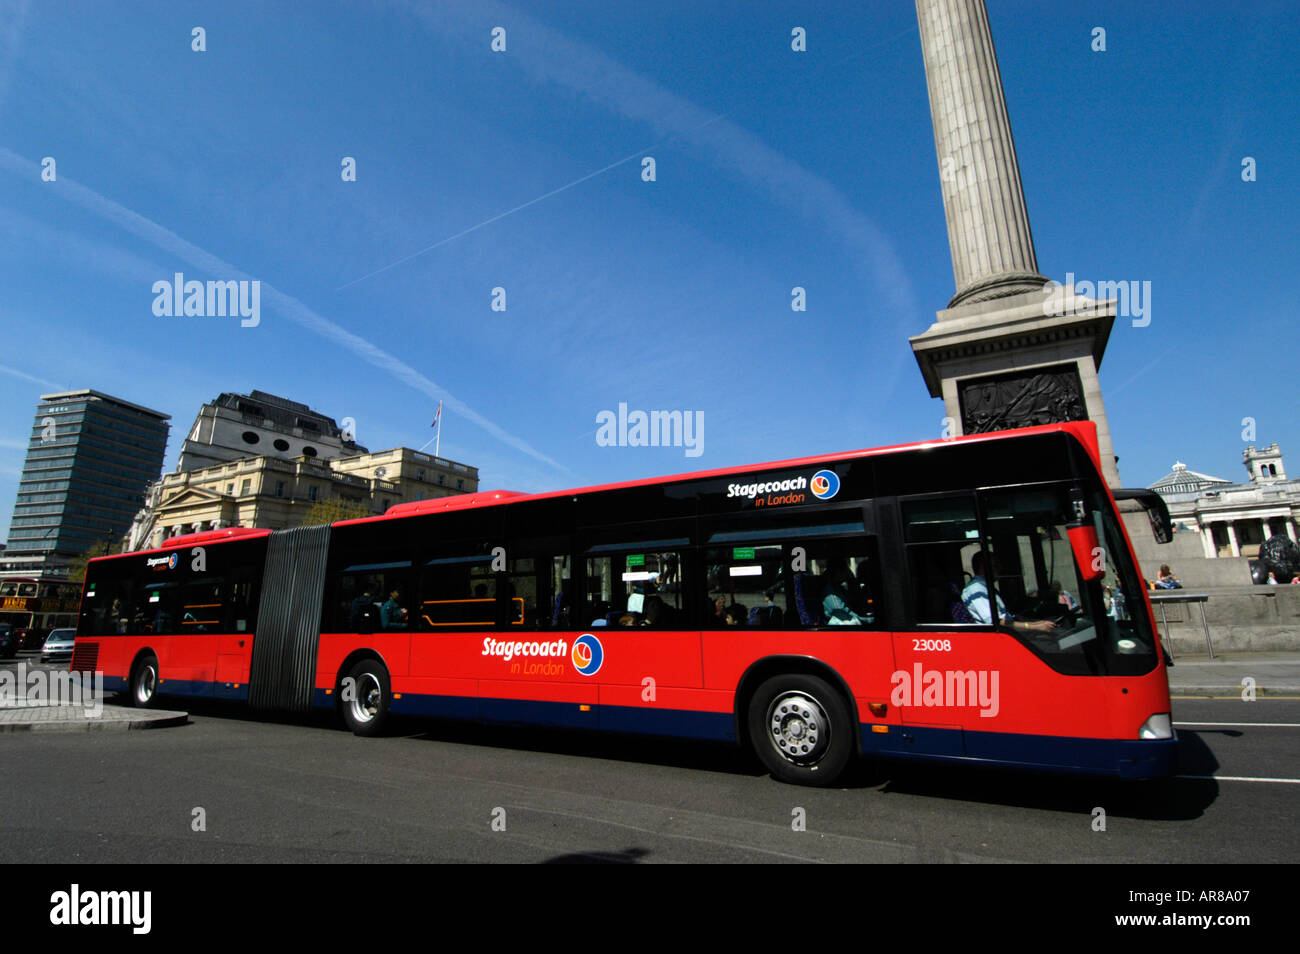 Stagecoach bendy bus London England UK Stock Photo